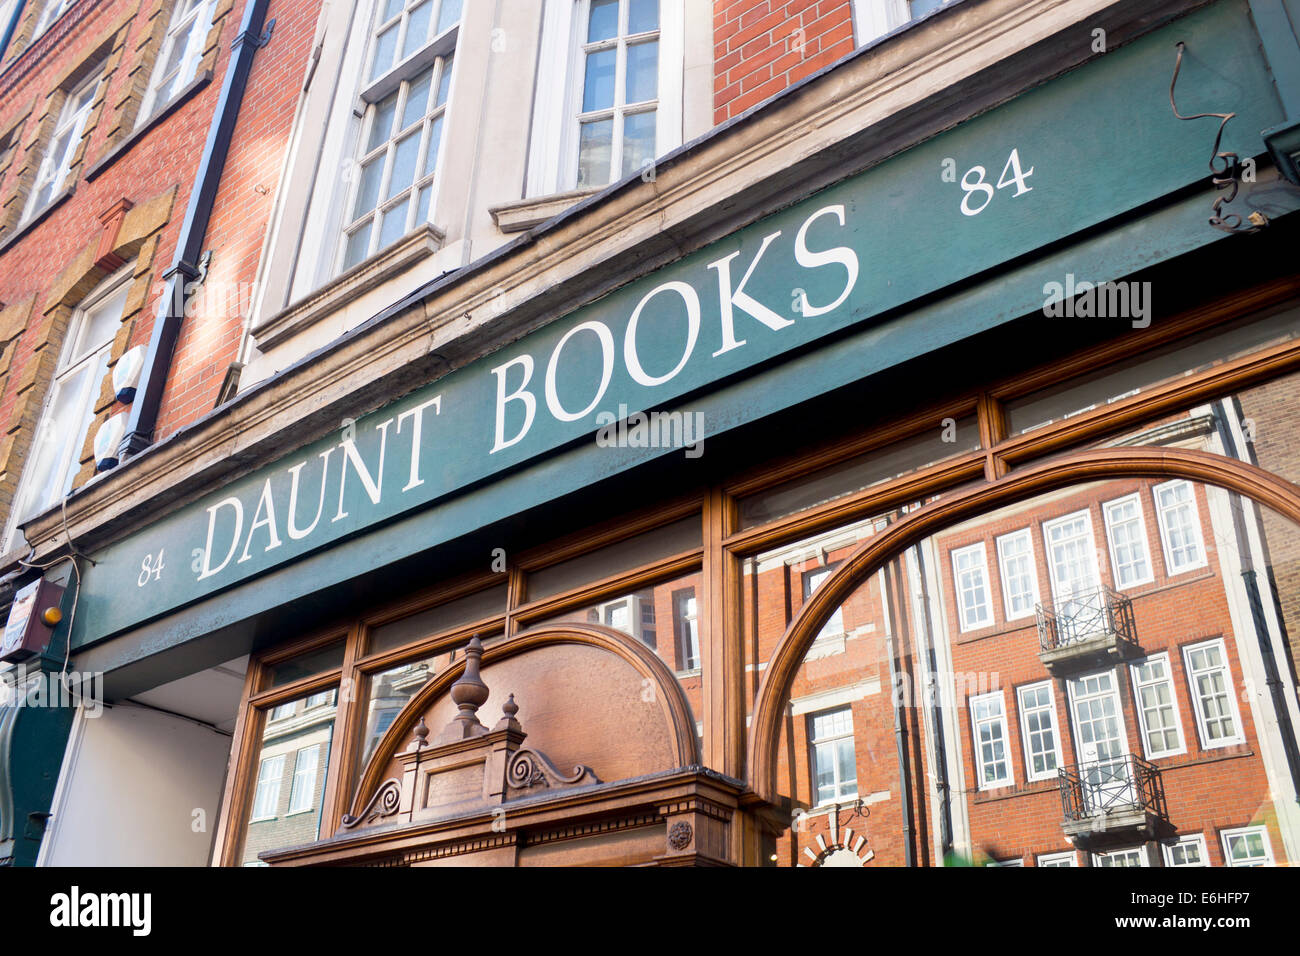 Daunt Books Independent travel bookshop Marylebone High Street London England UK Buildings opposite reflected in window Stock Photo